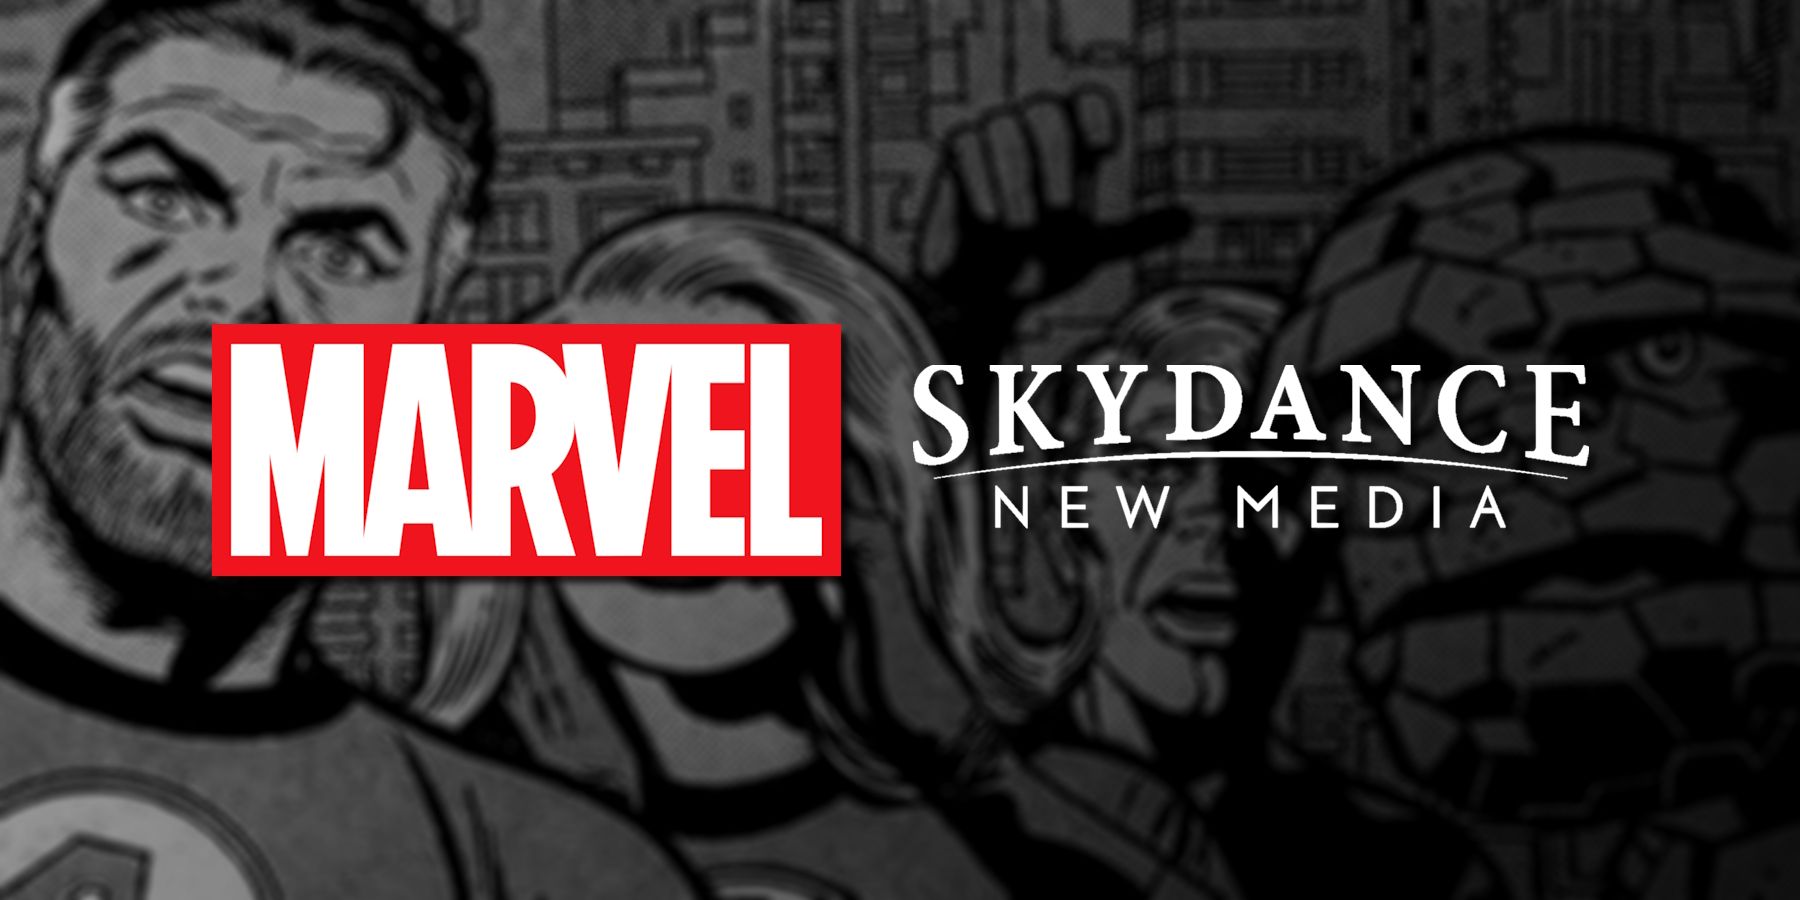 Marvel Skydance New Media logos over Fantastic Four (dropped shadow)